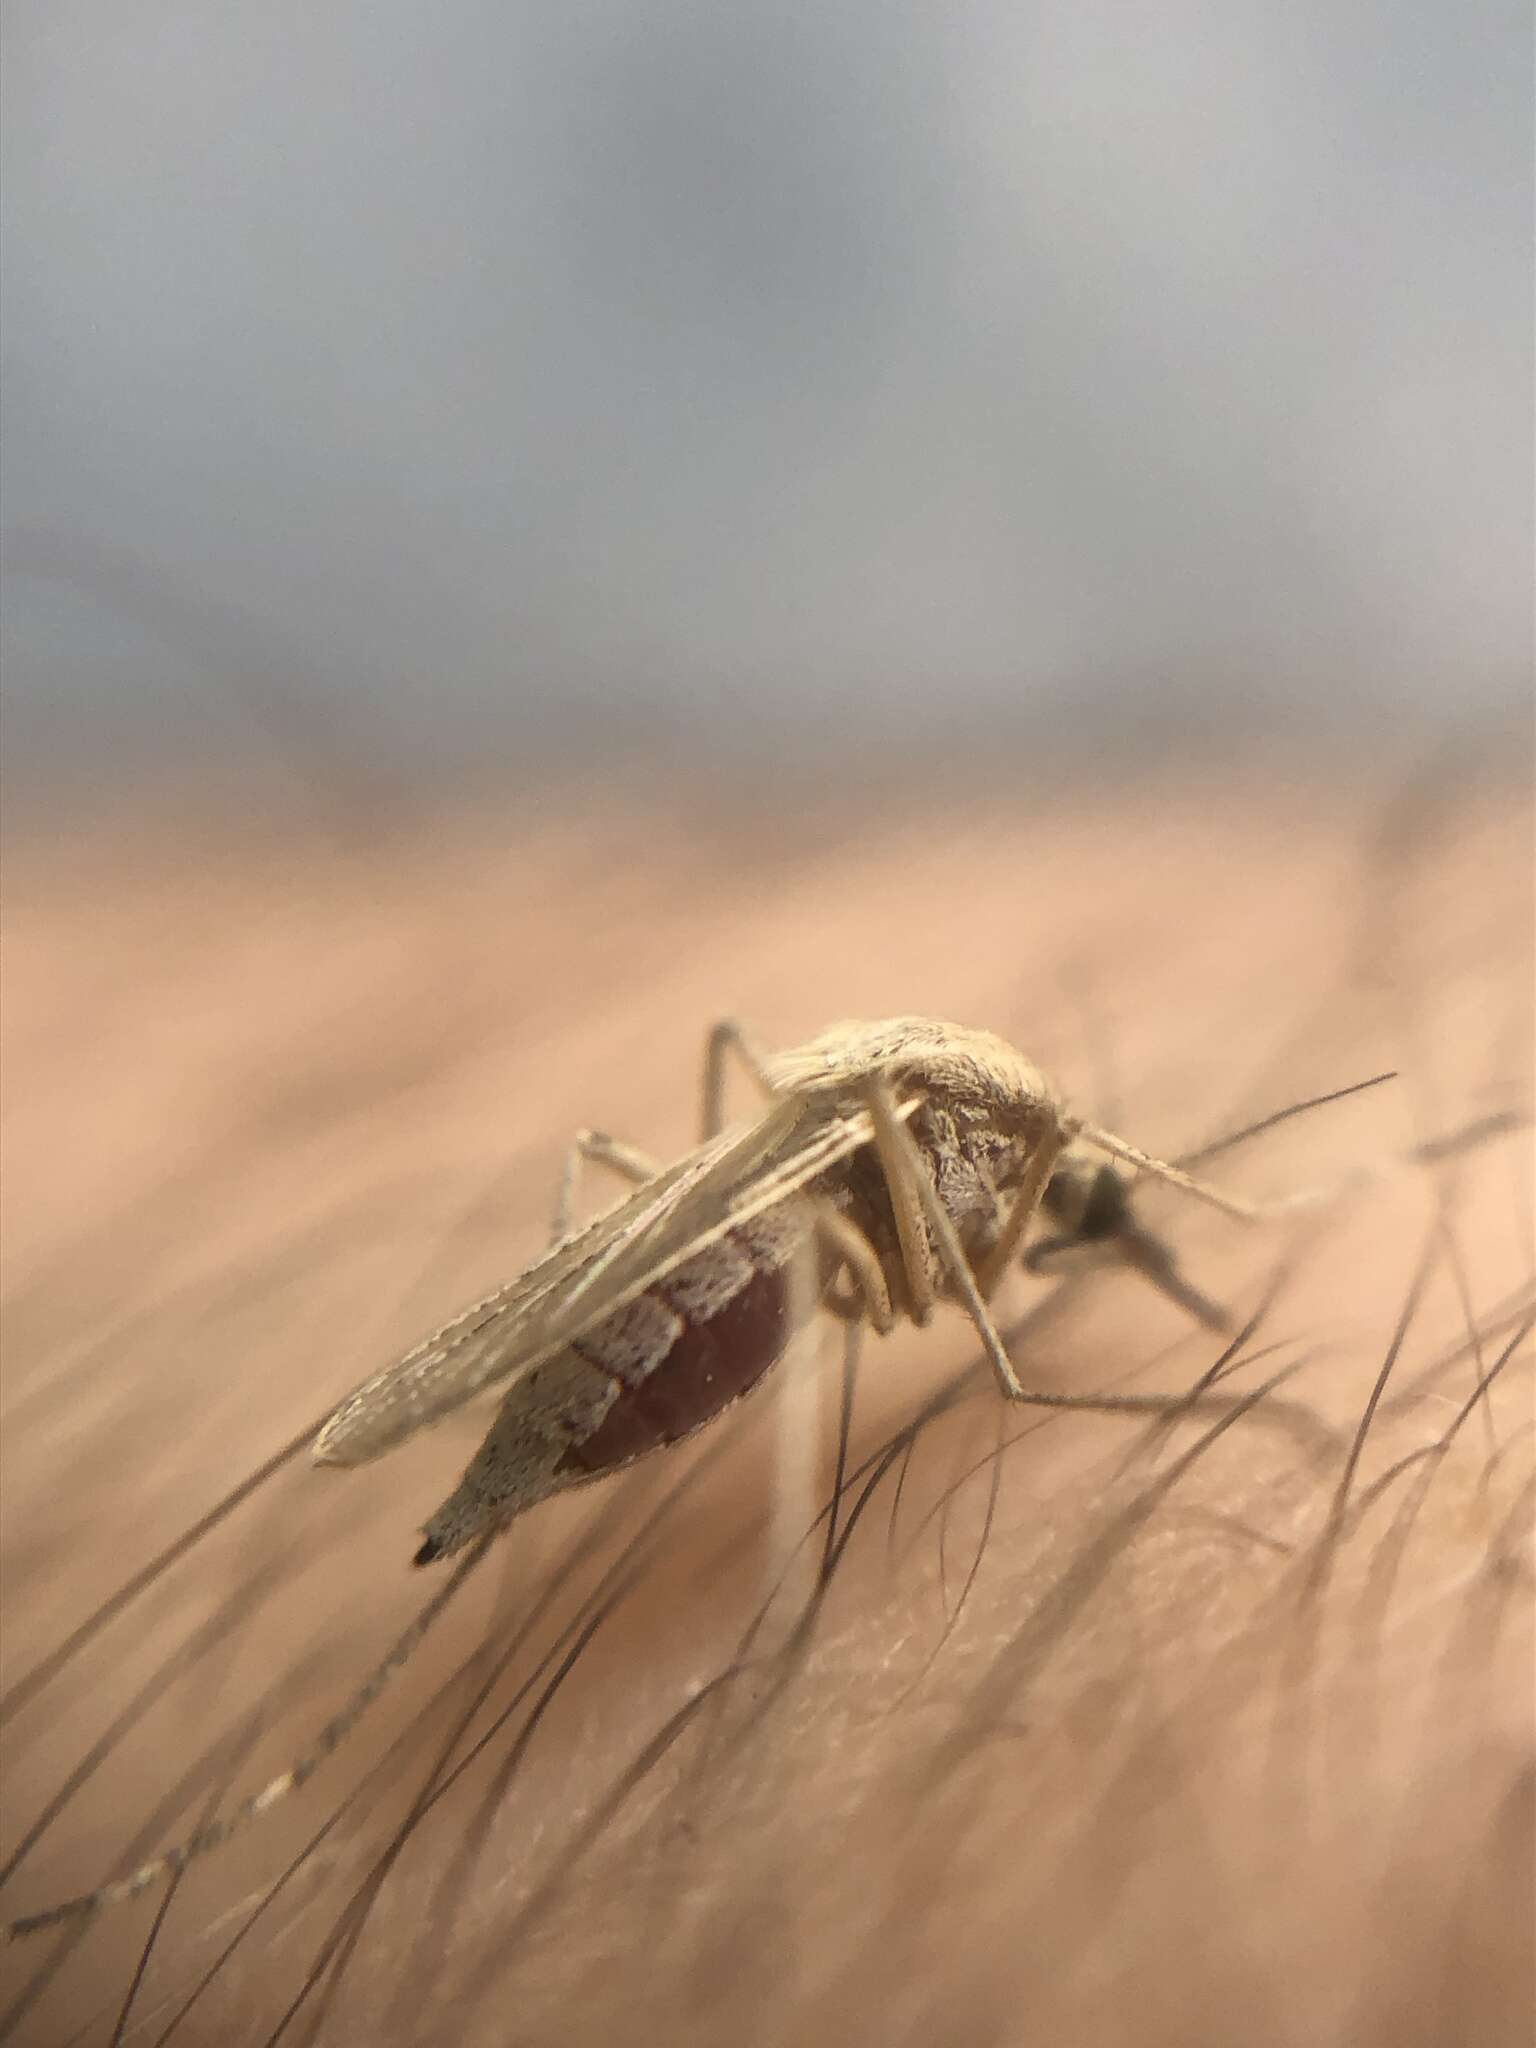 Image of Aedes dorsalis (Meigen 1830)